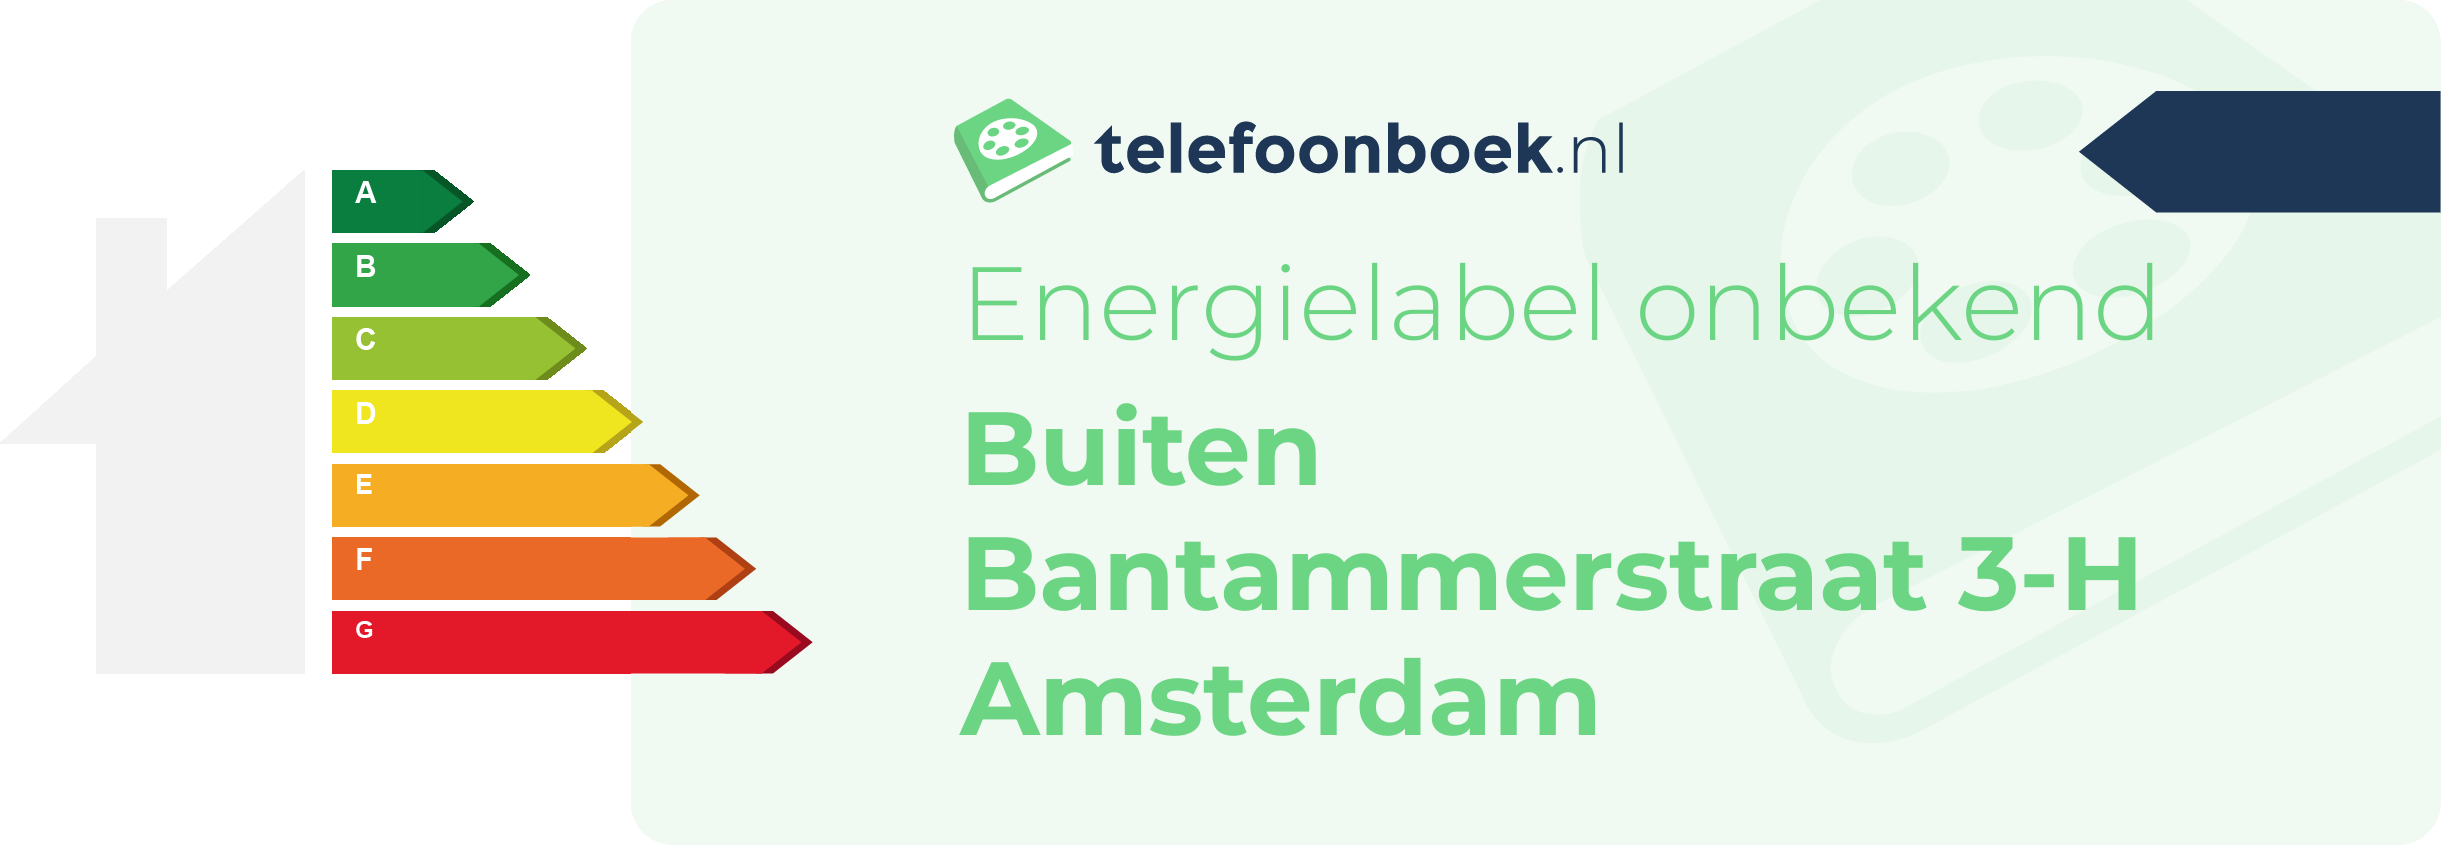 Energielabel Buiten Bantammerstraat 3-H Amsterdam